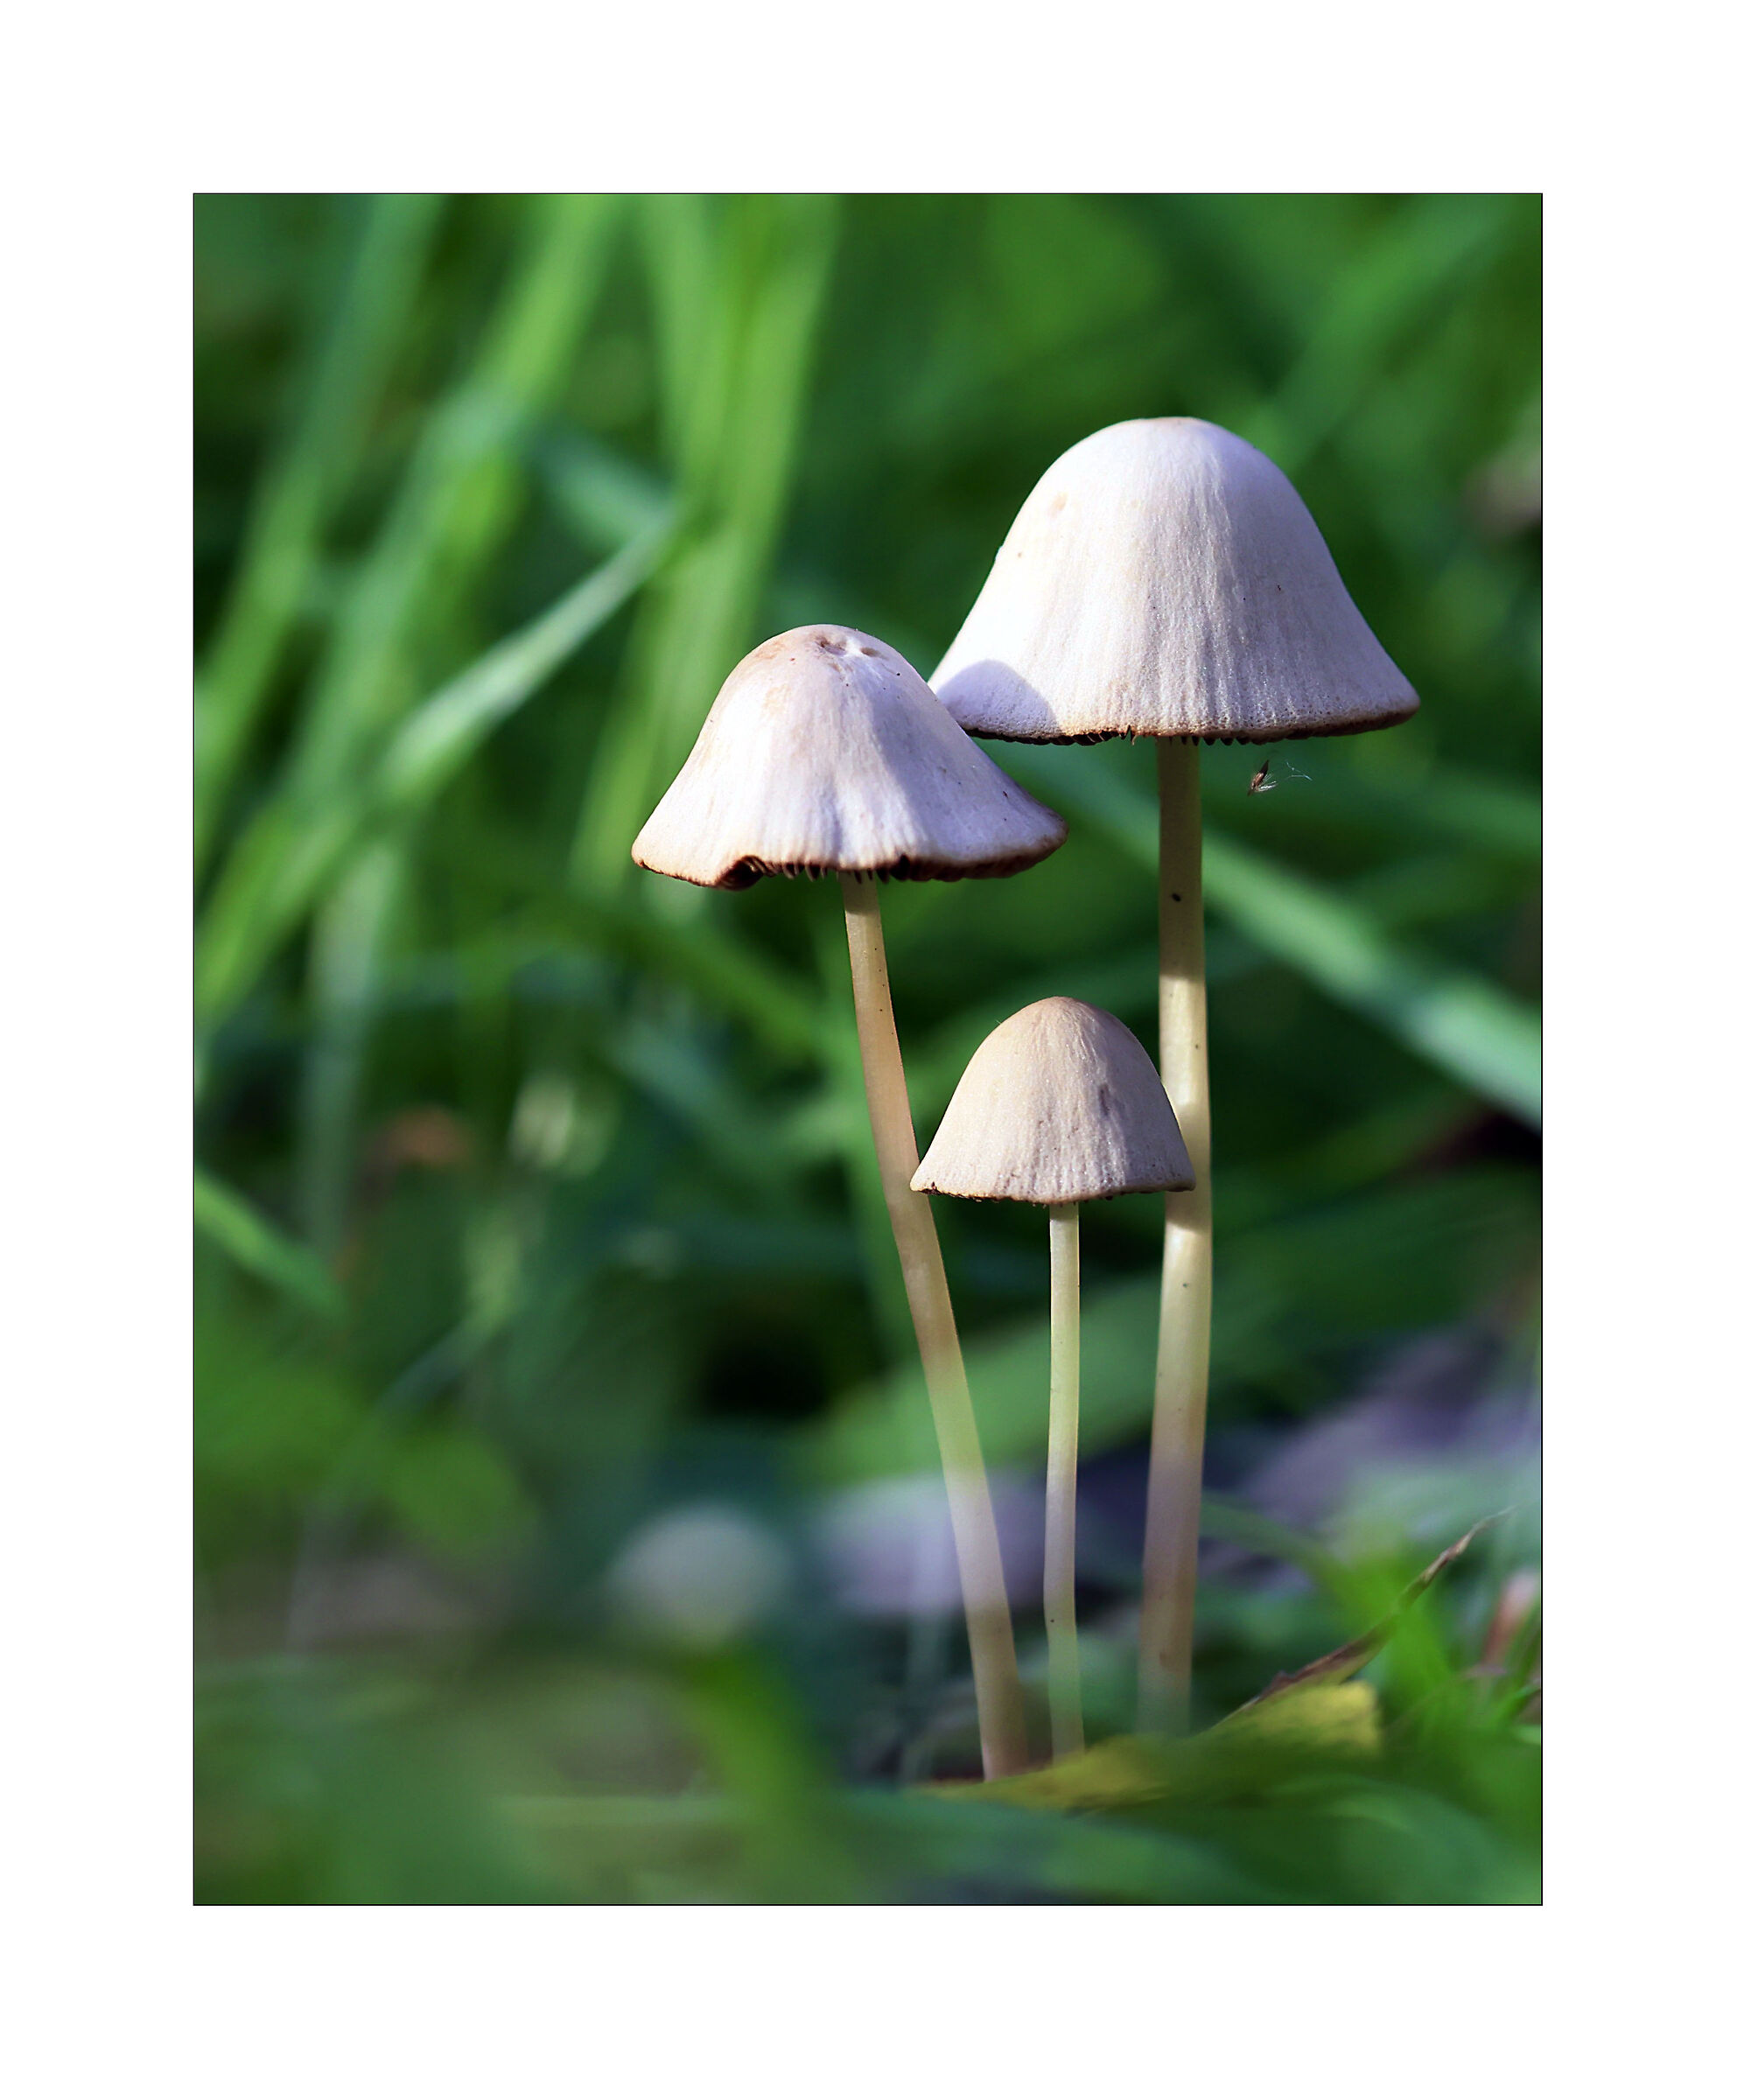  Nail mushrooms...